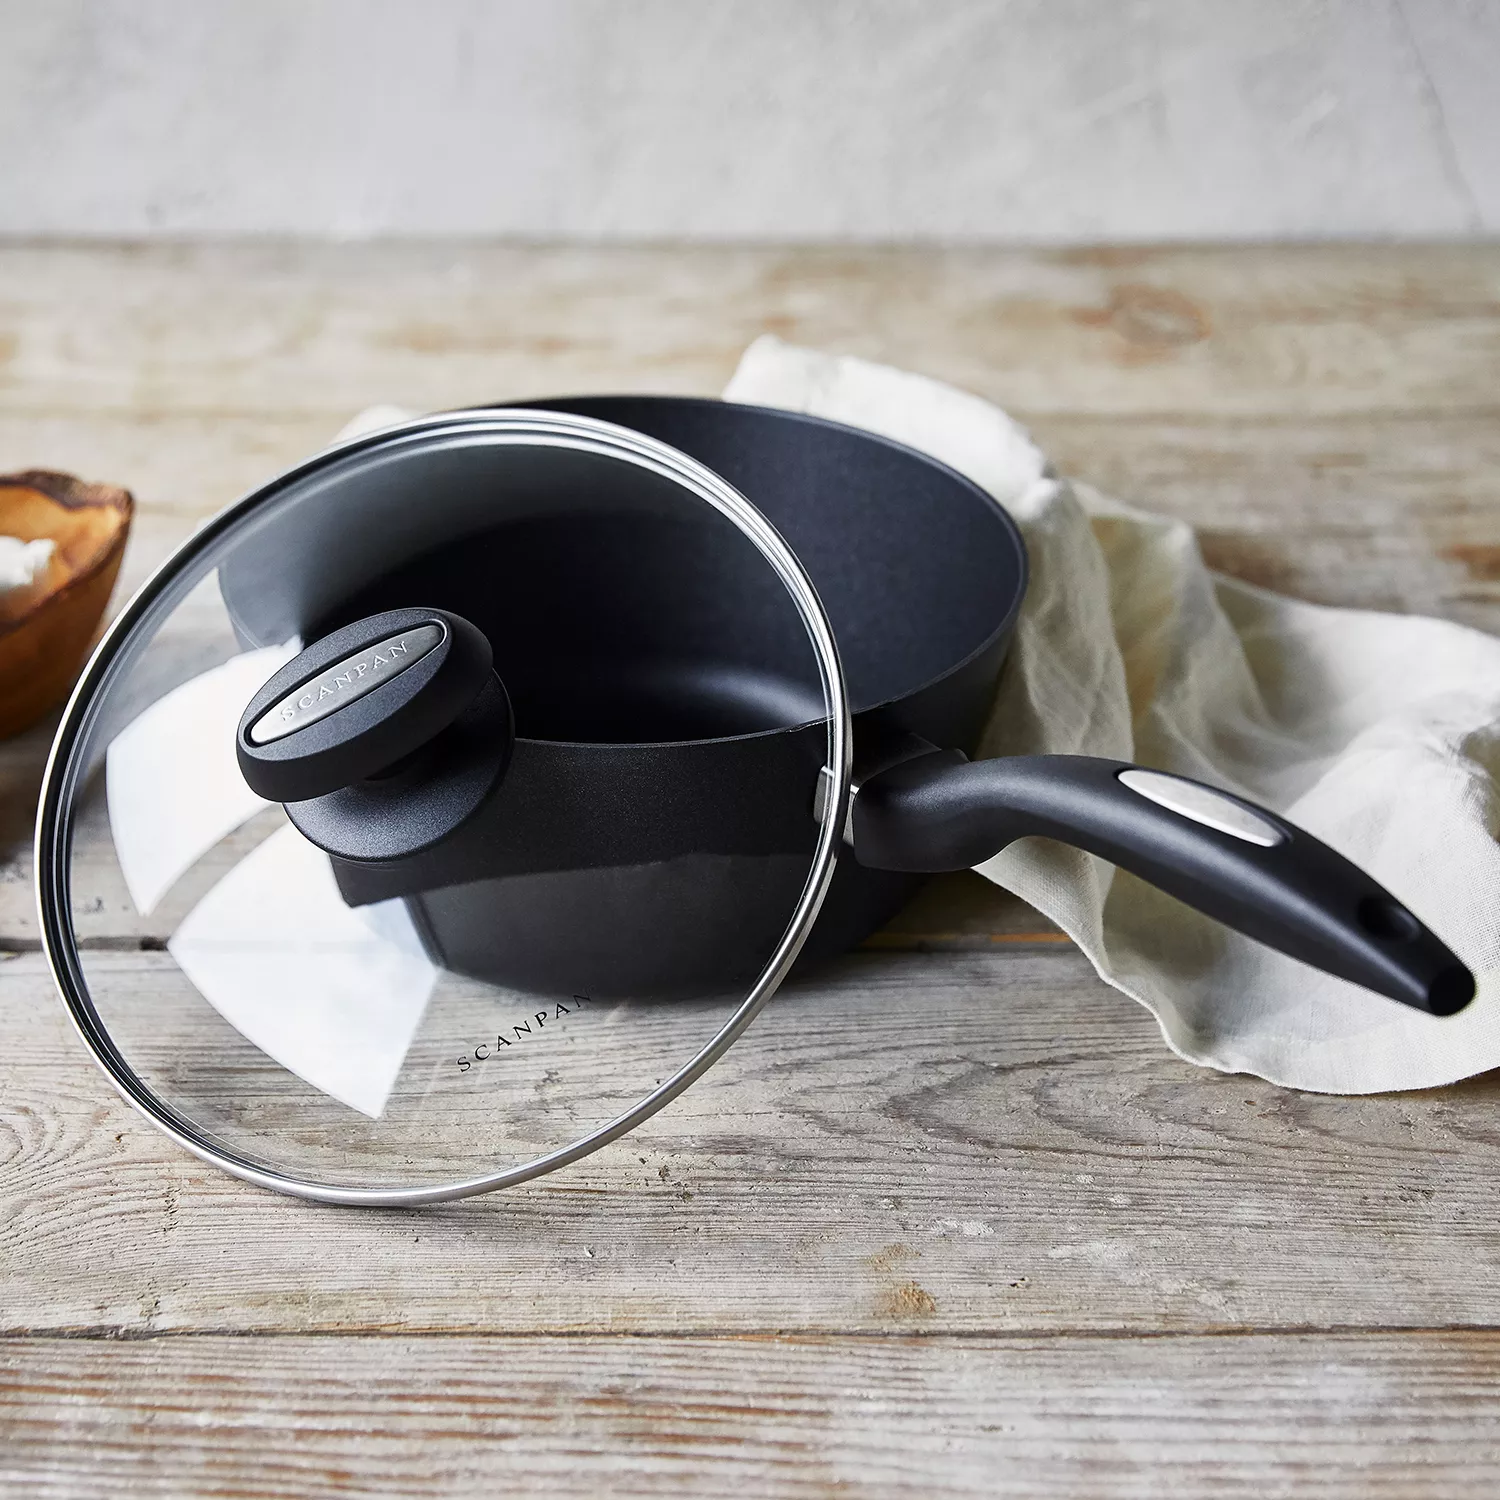 Silicone Springform, Non-Stick 100% Food-Grade Tempered Glass Baking Pan Set